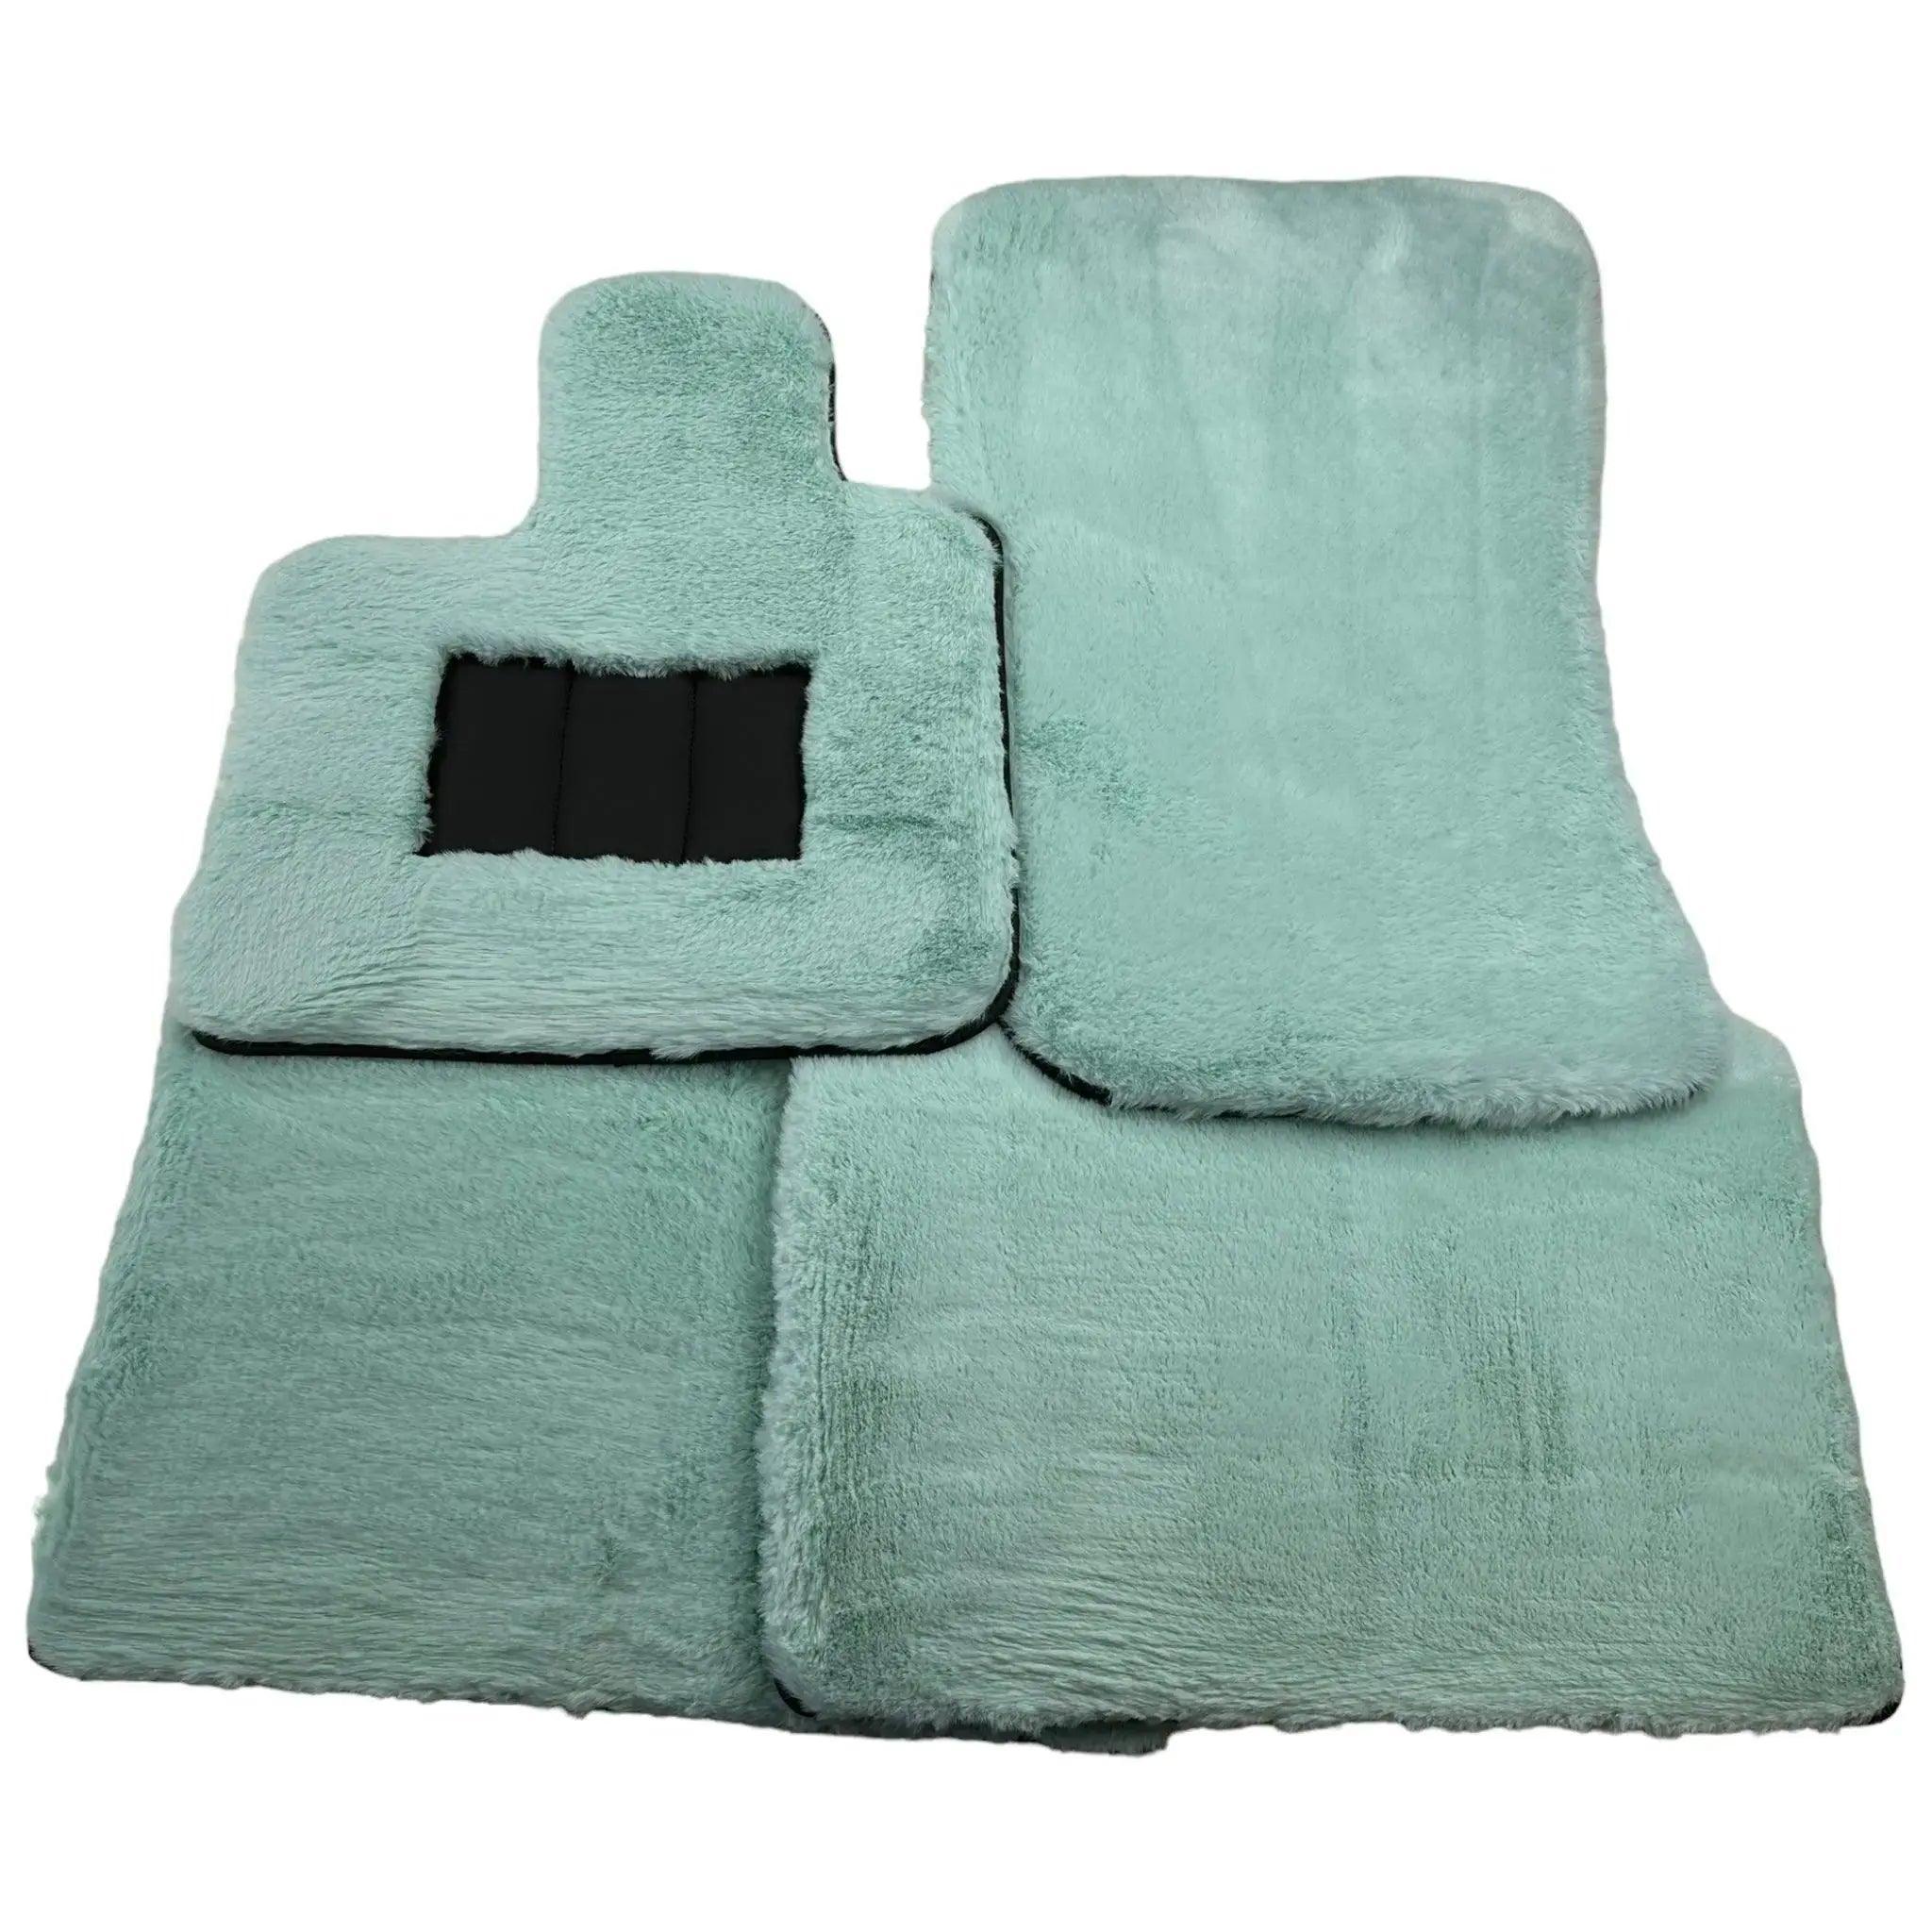 Tiffany Blue Sheepskin Floor Mats For Bentley Flying Spur (2013-2019) Er56 Design Brand